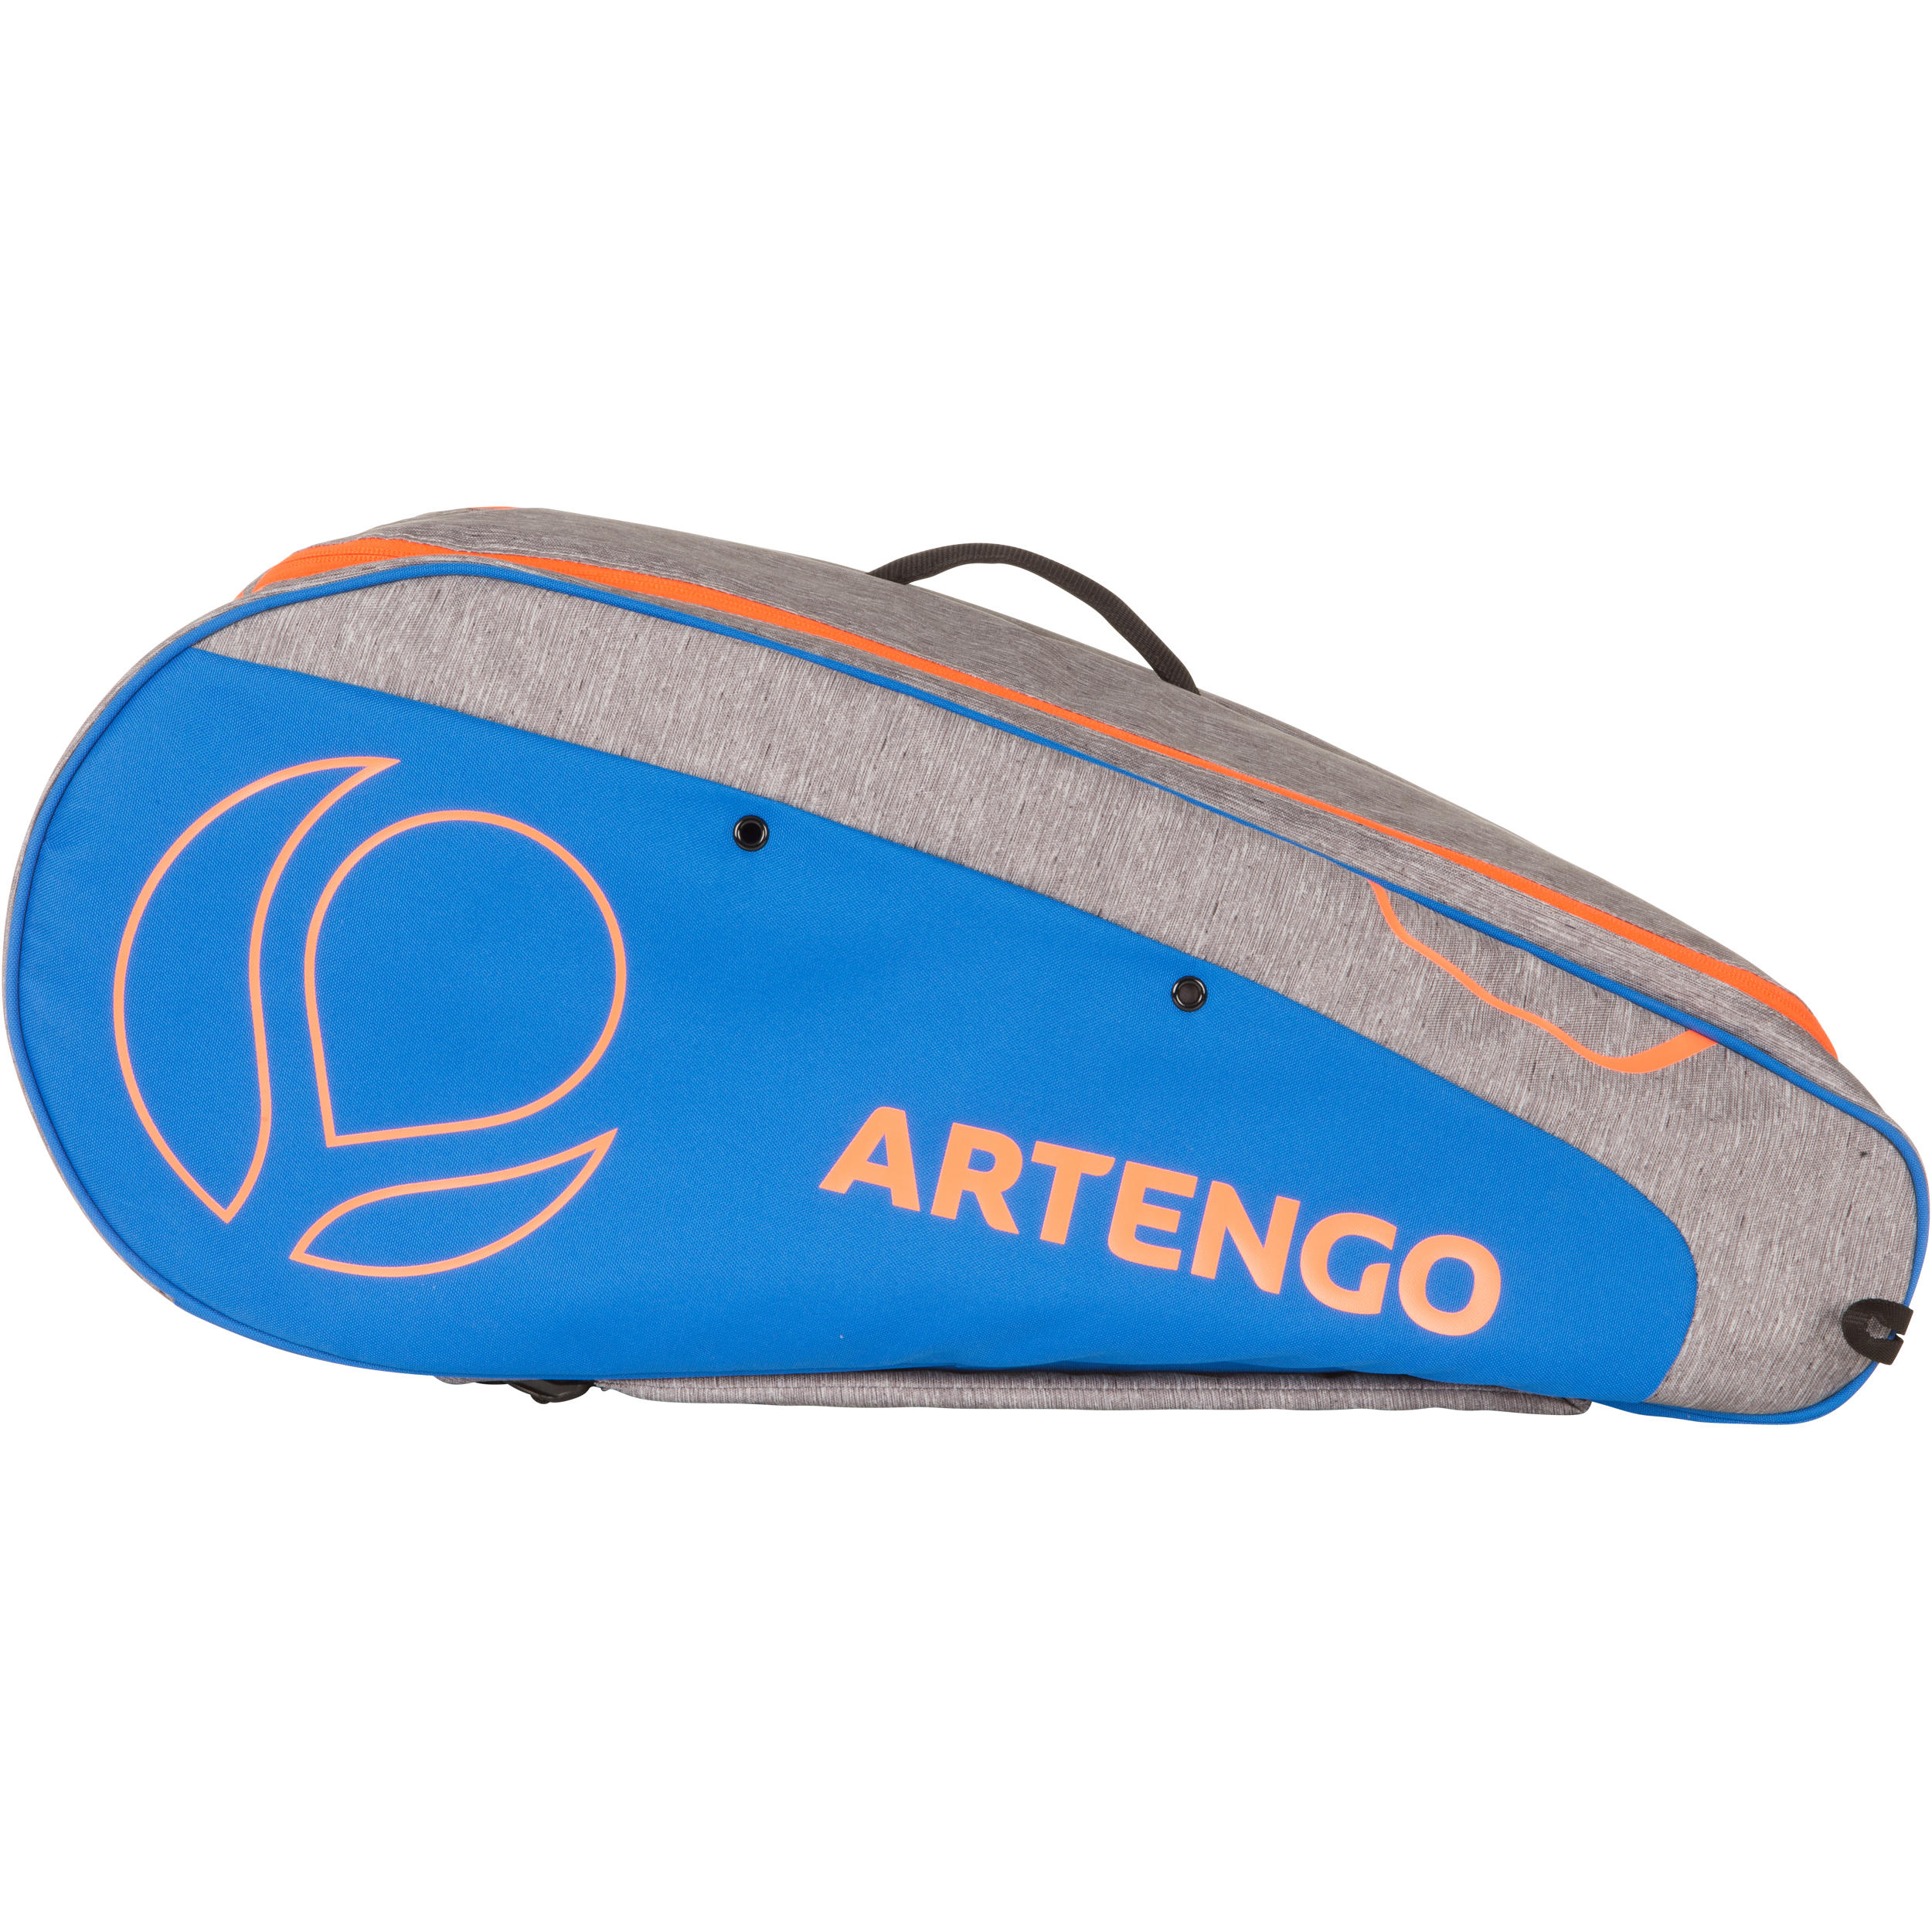 ARTENGO MB 530 Racket Sports Bag - Light Grey/Blue